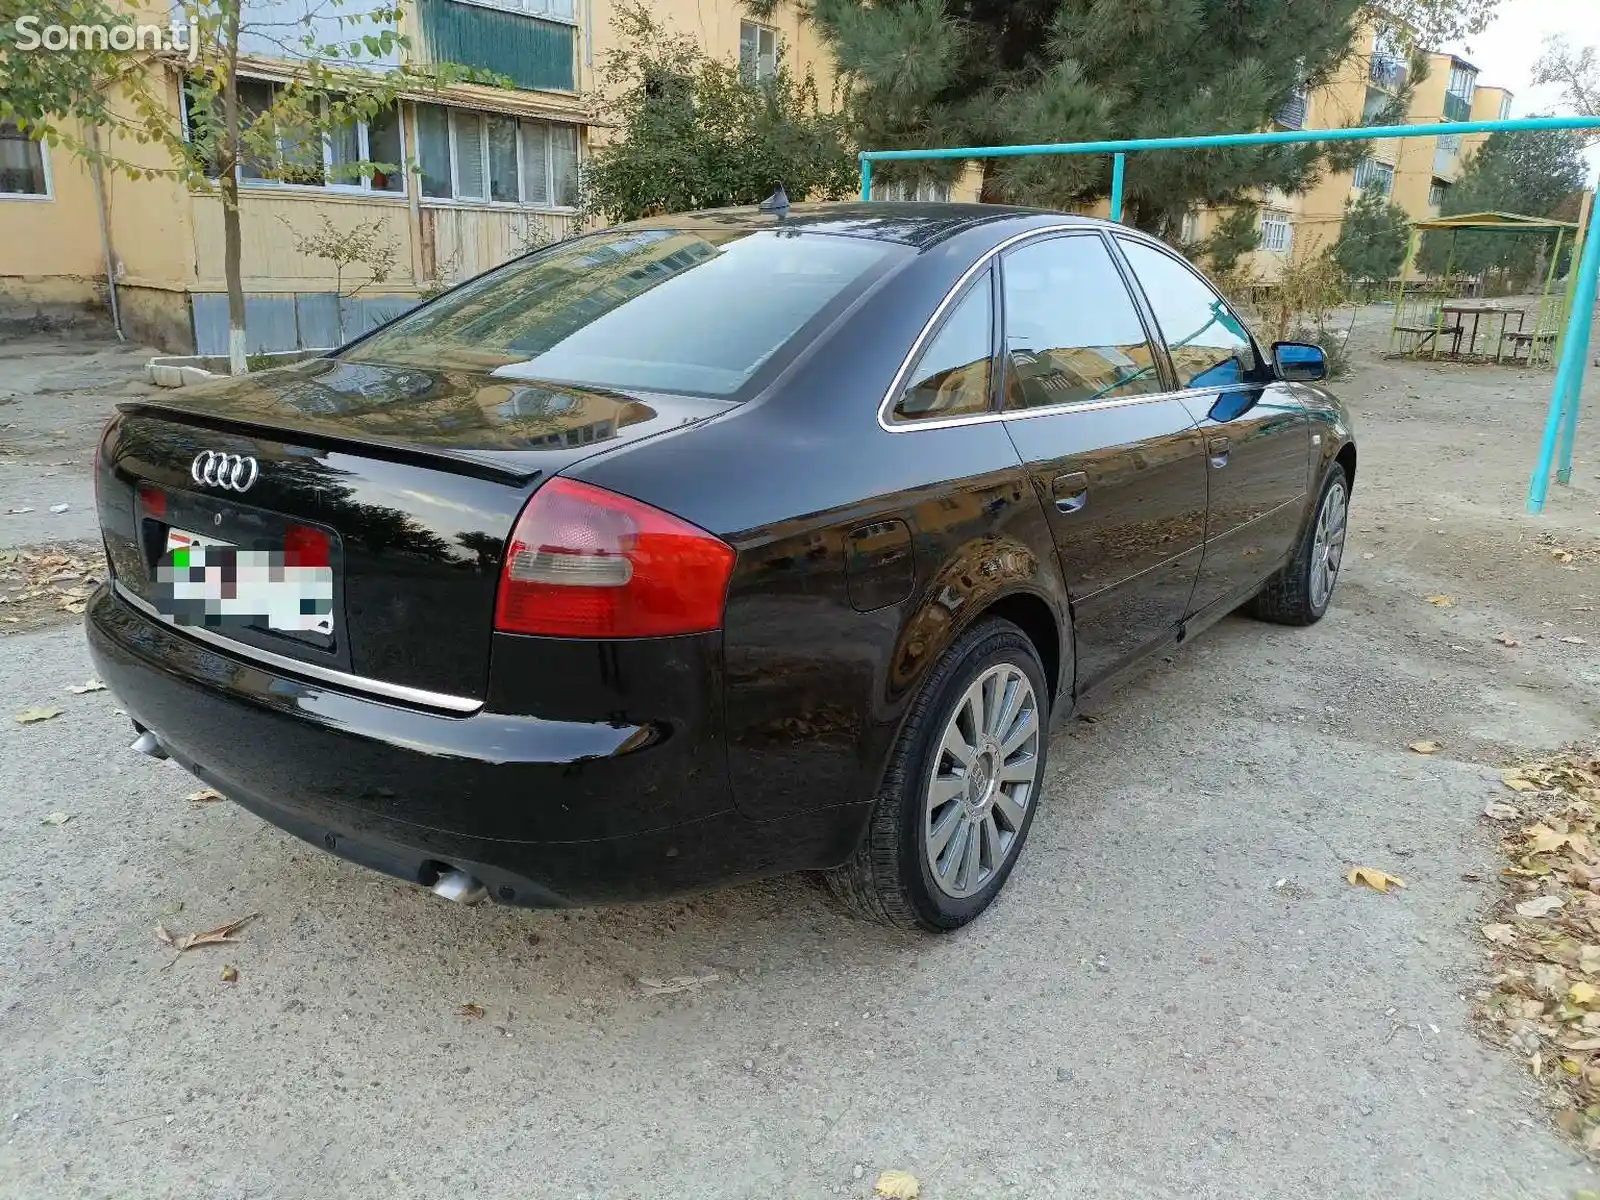 Audi A6, 2001-2